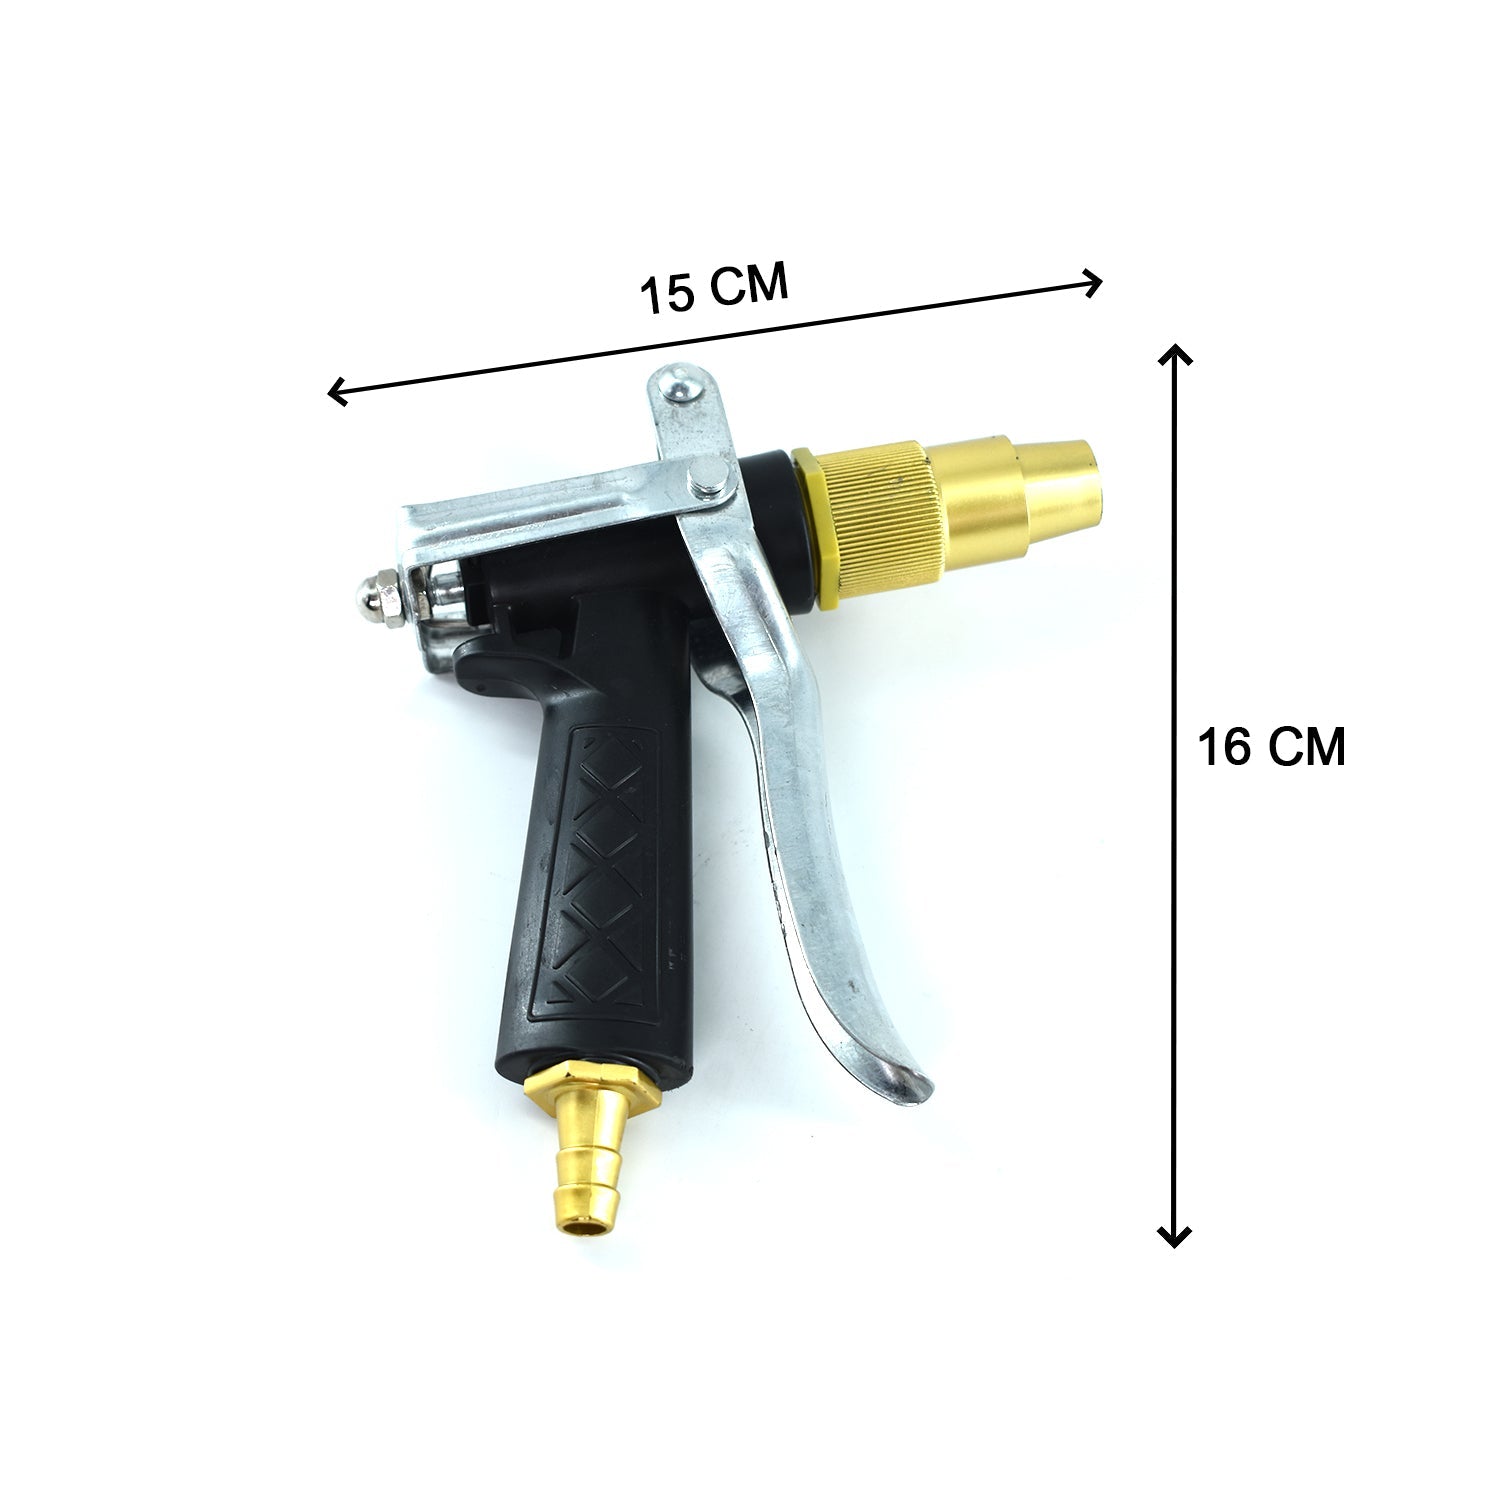 1693A Durable Gold Color Trigger Hose Nozzle Water Lever Spray DeoDap